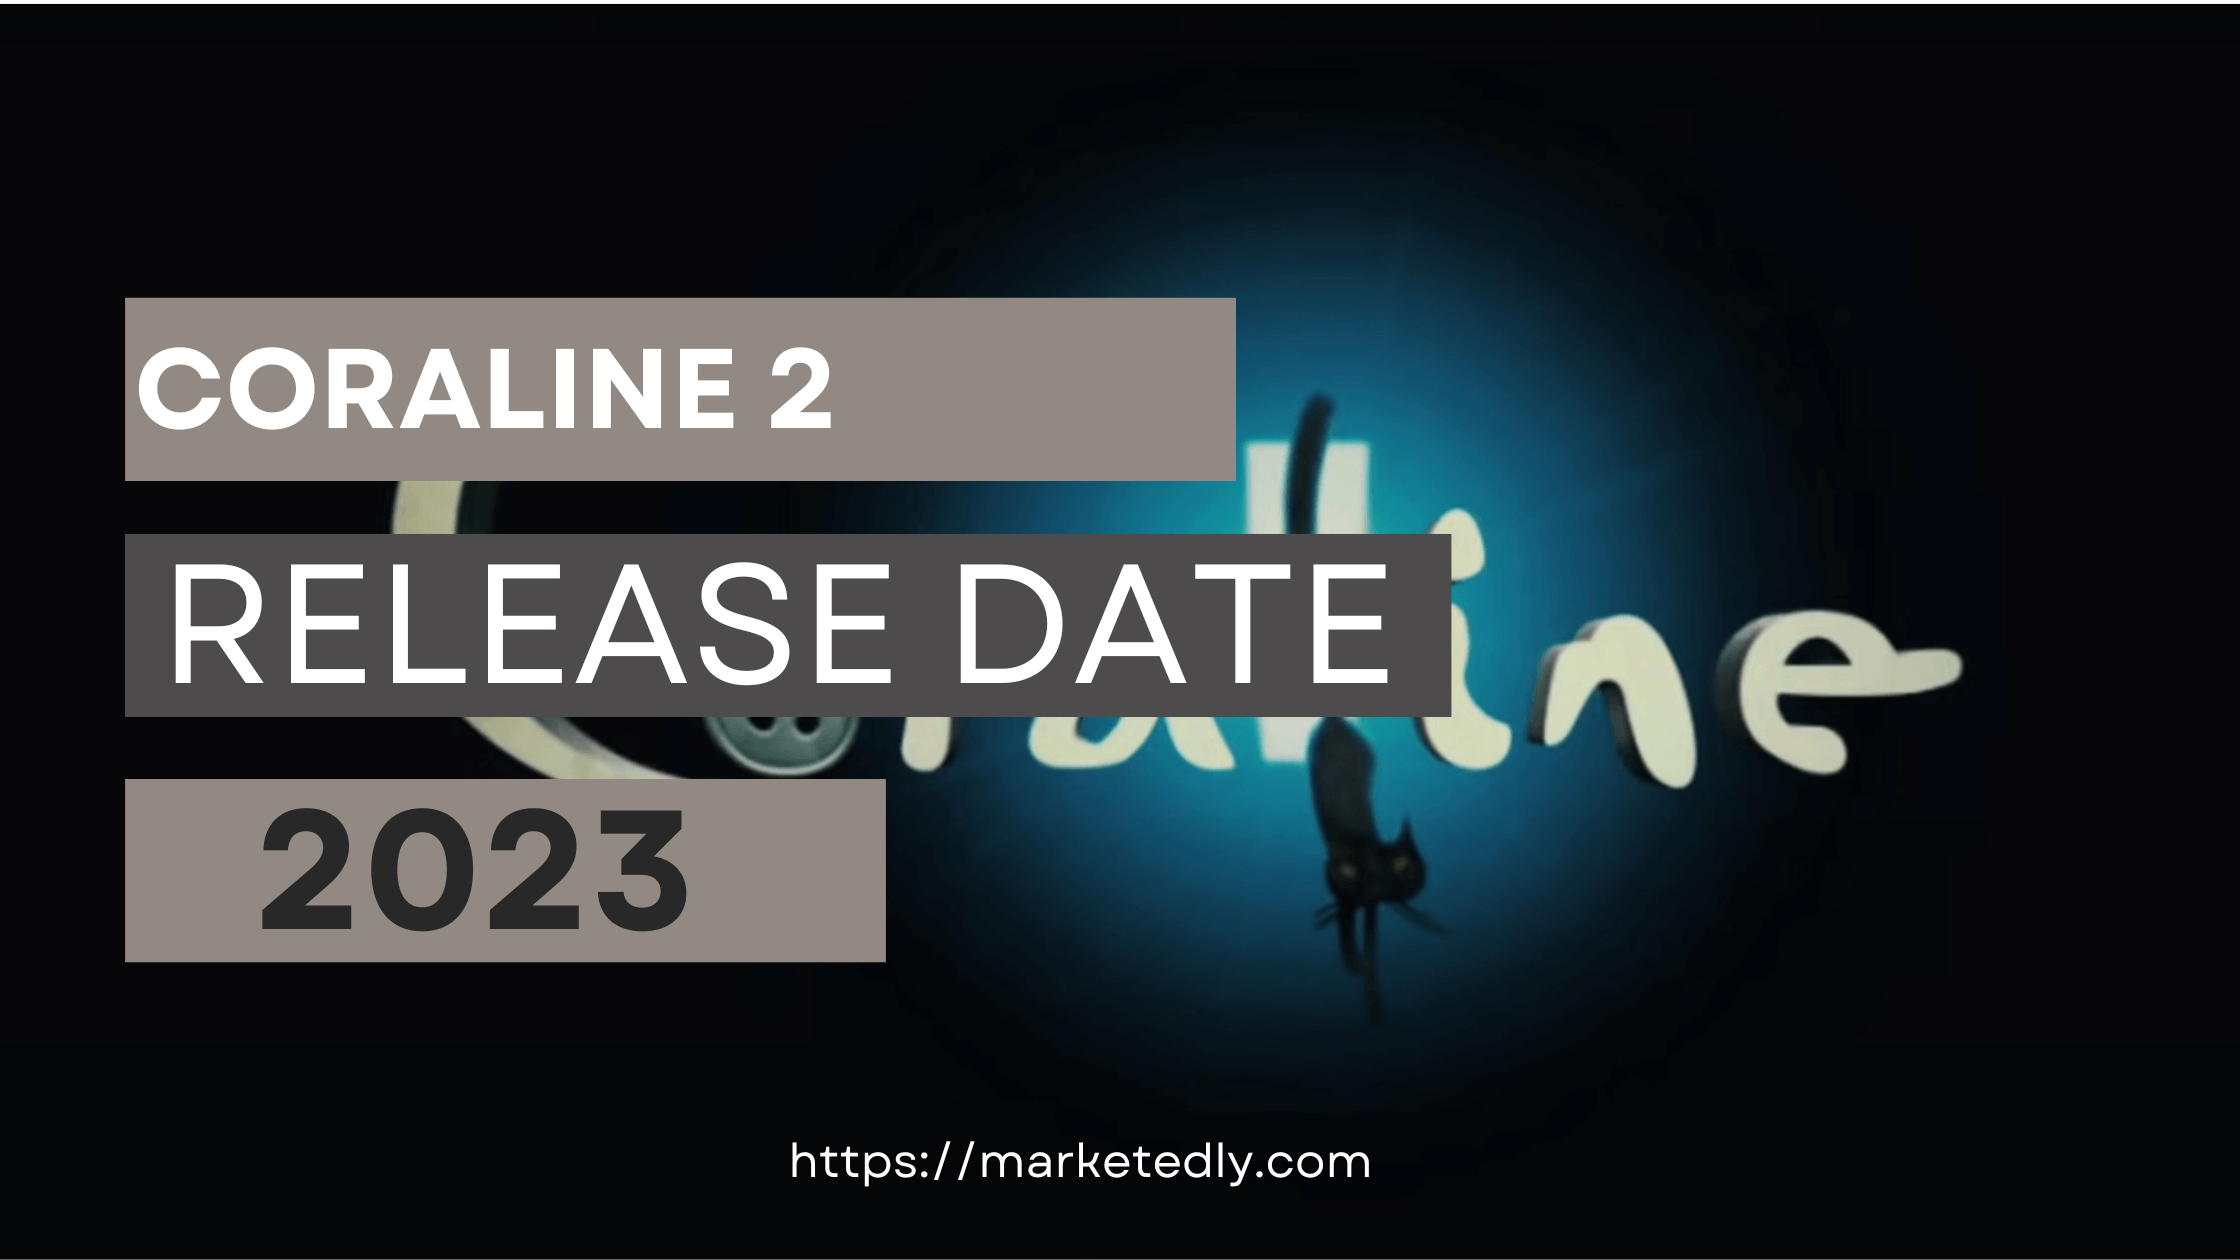 coraline 2 release date upcoming updates